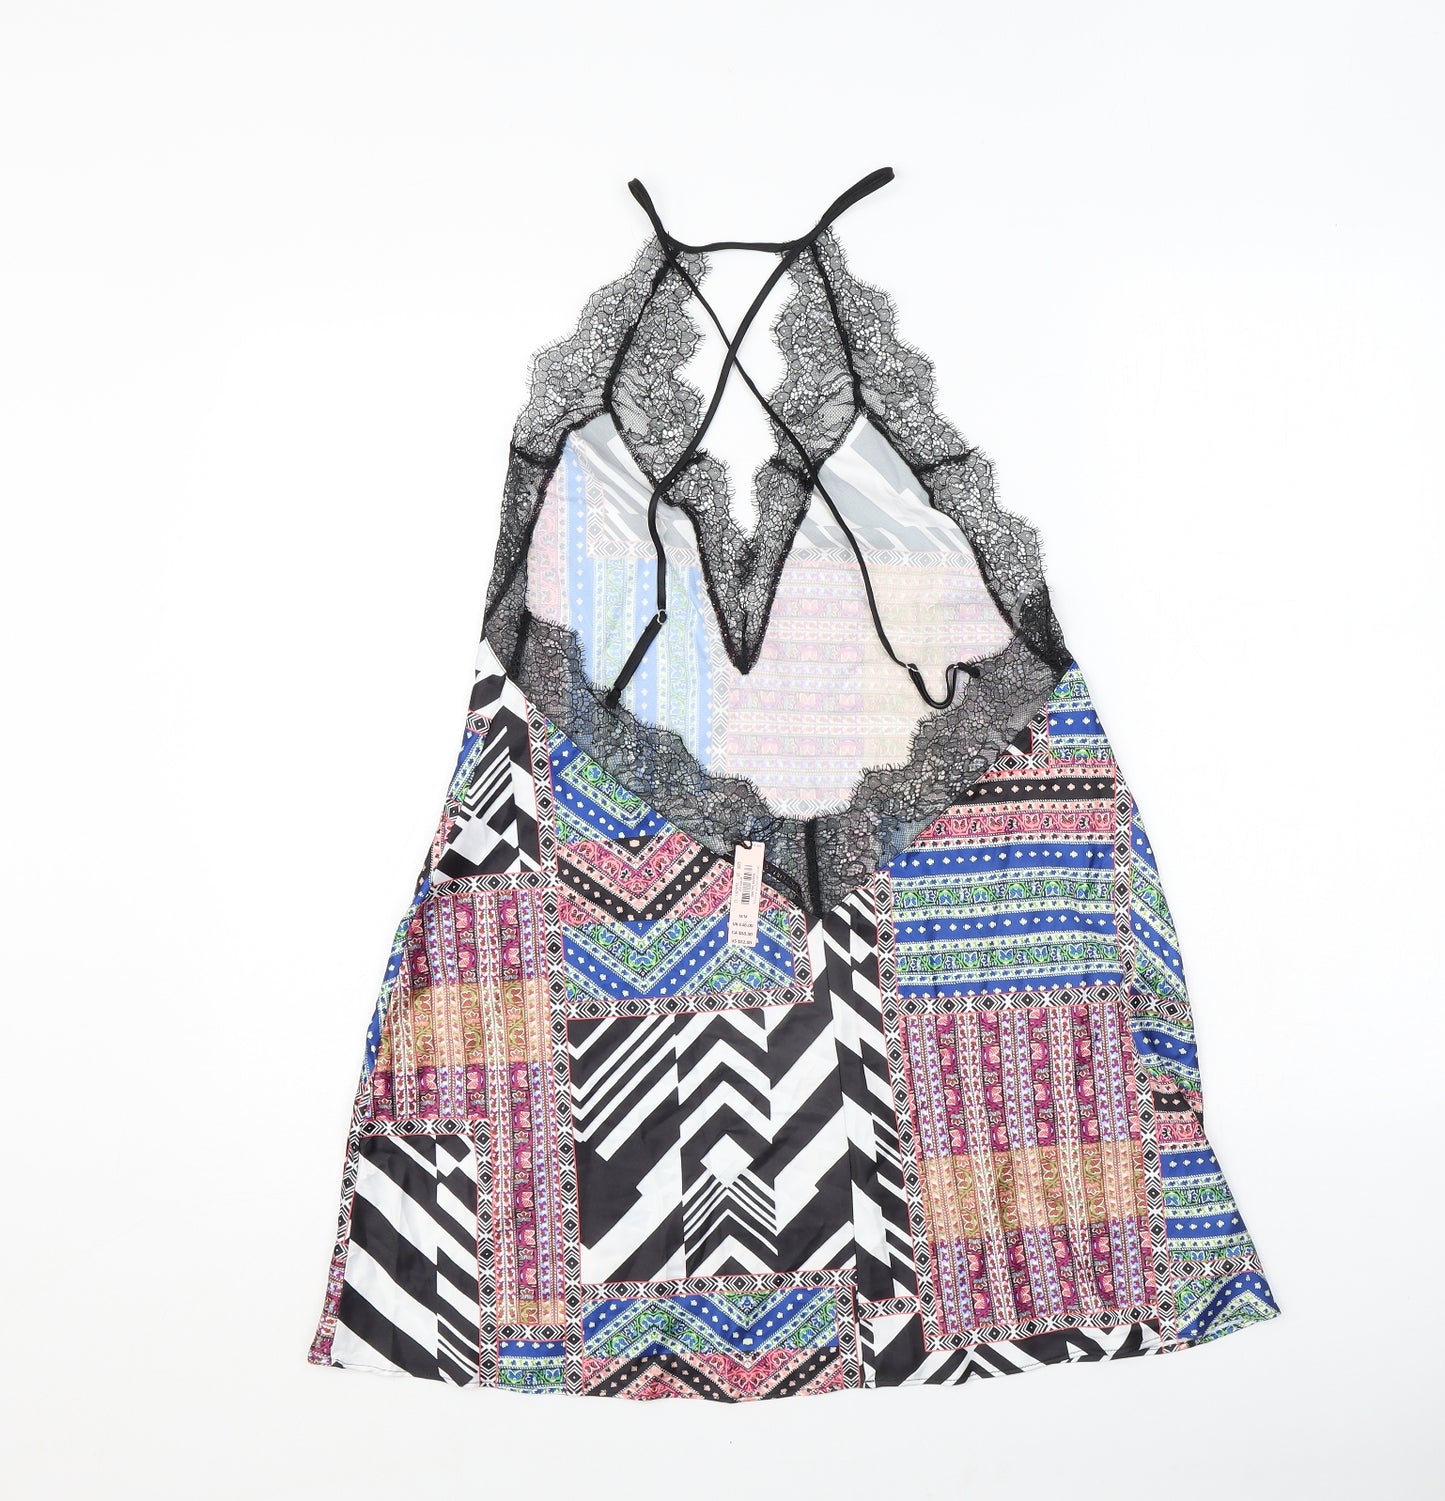 Victoria's Secret Womens Multicoloured Geometric Polyester Chemise Dress Size M - Lace Trim